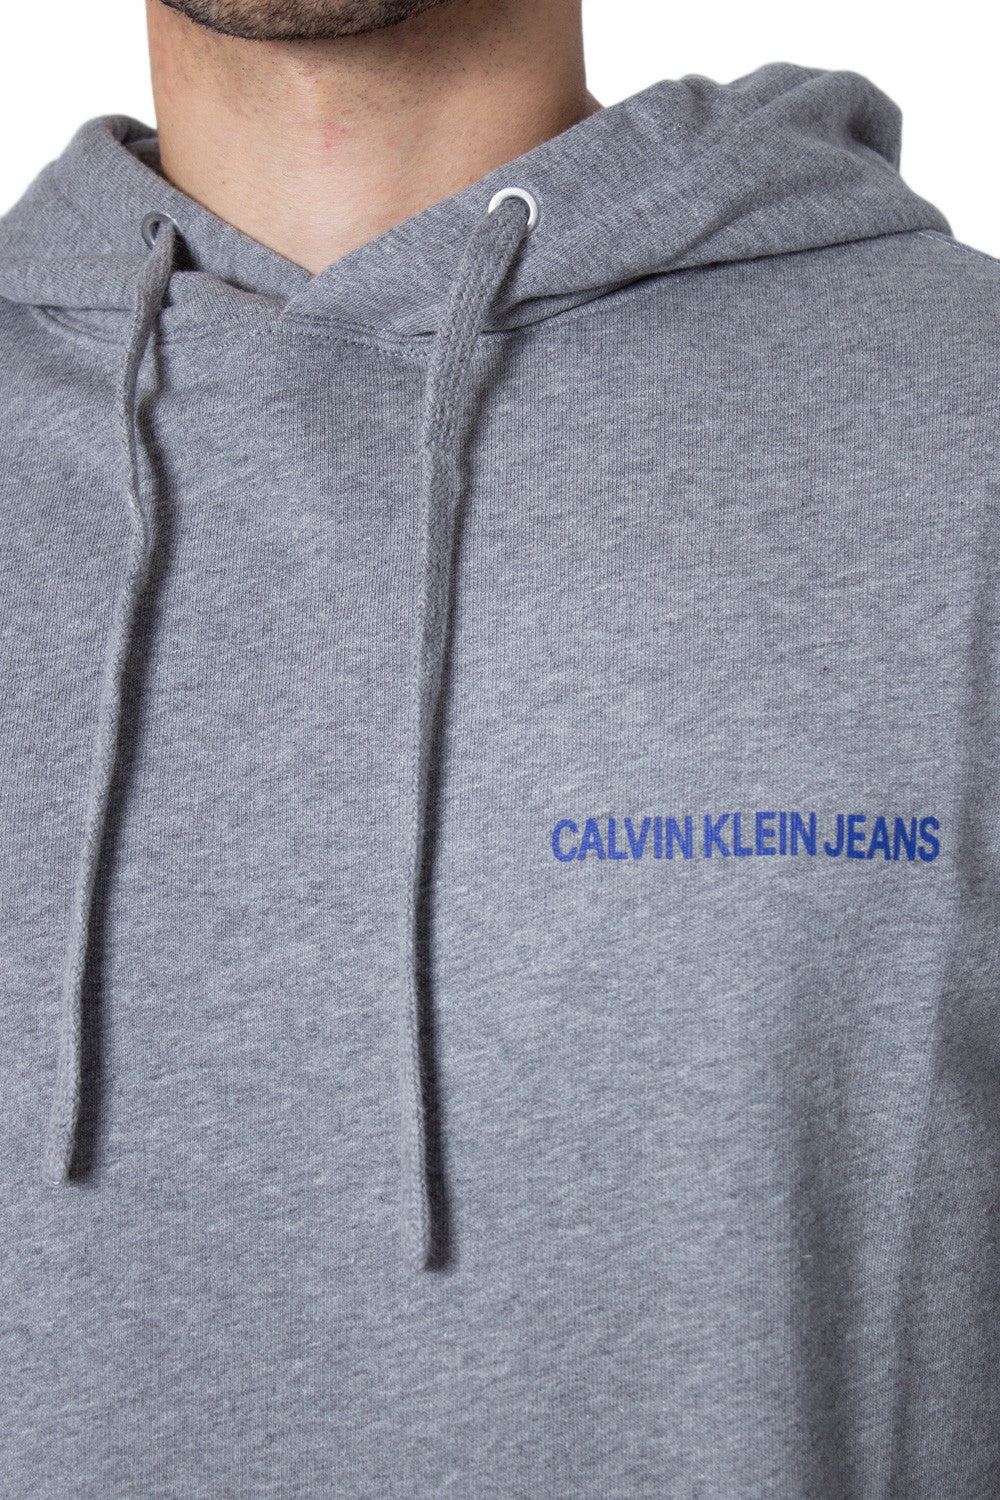 calvin klein jeans Calvin Klein Jeans Felpa Uomo